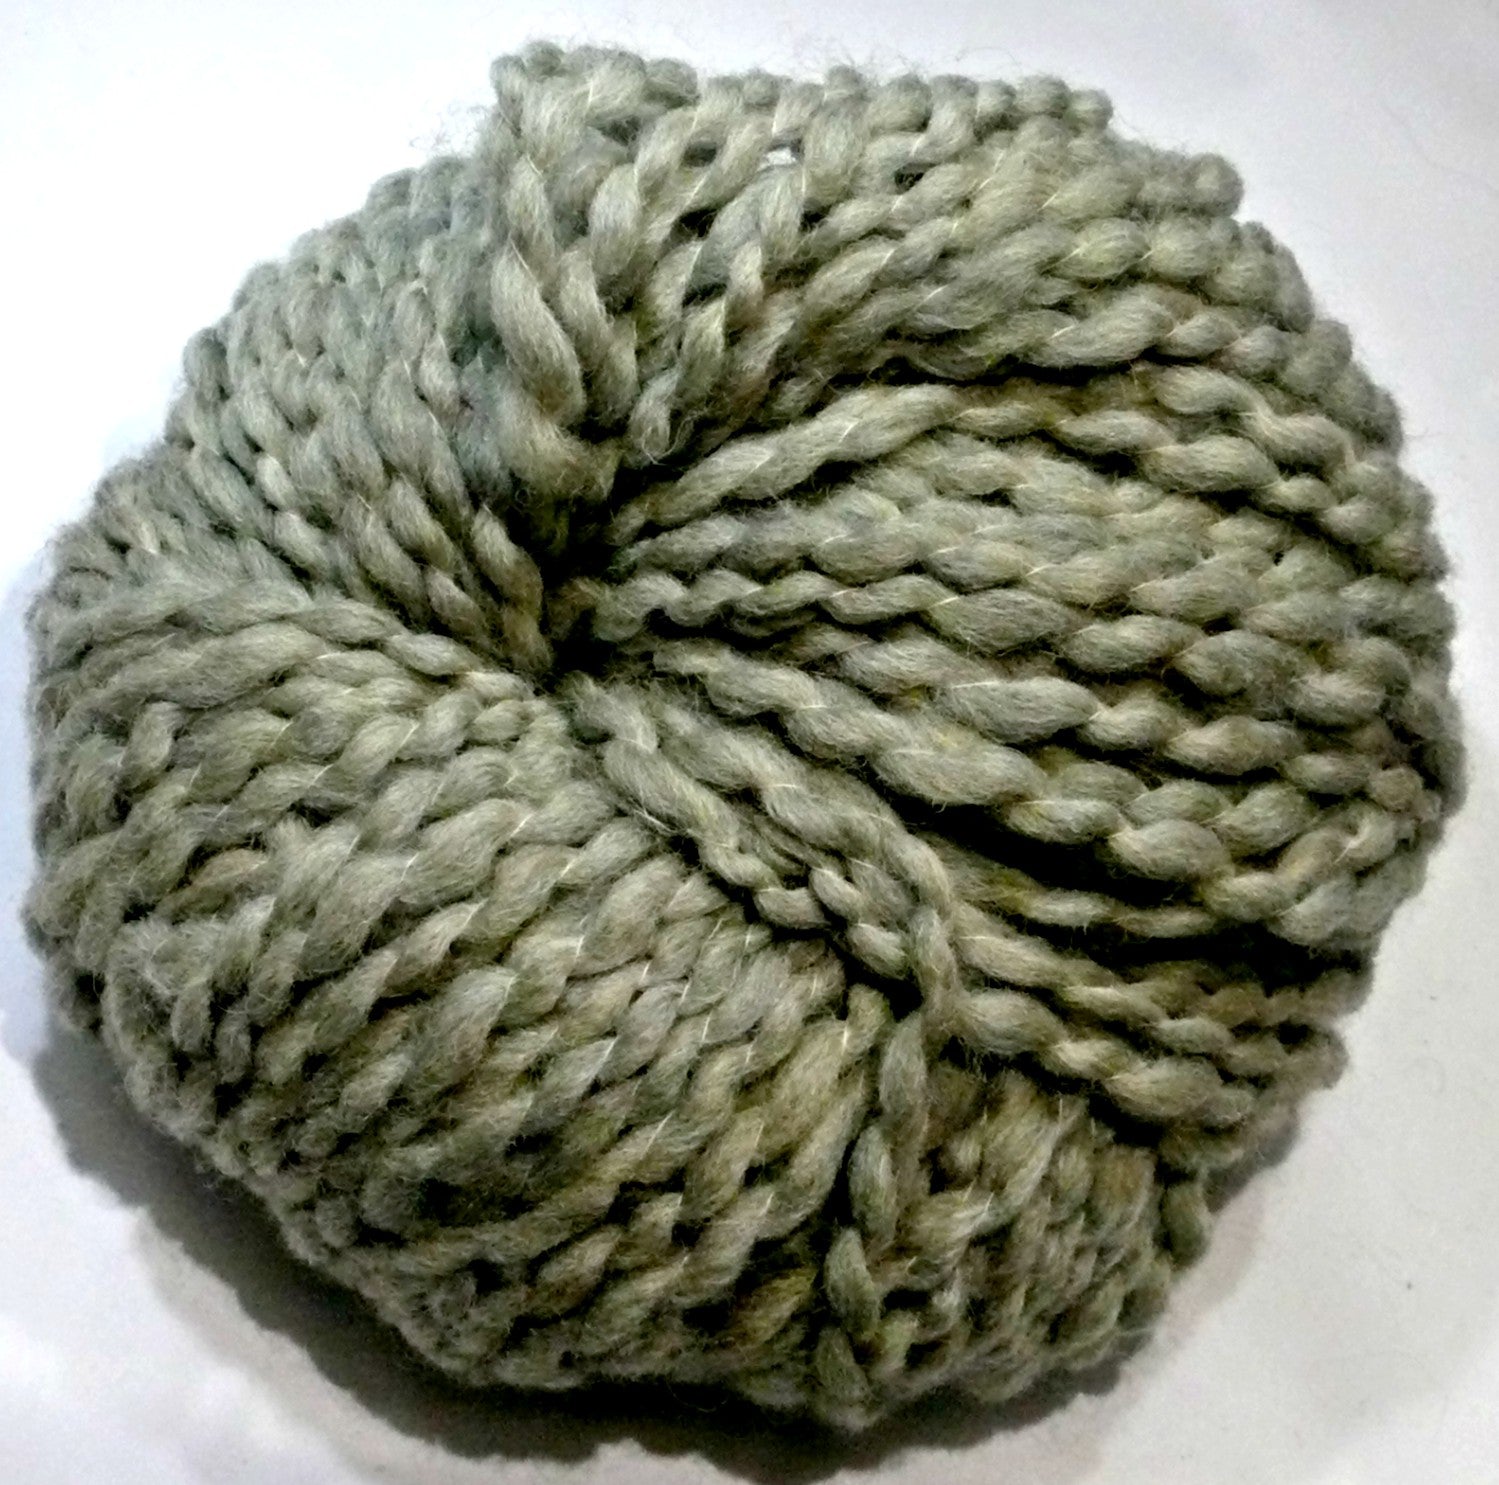 Mauch Chunky Bulky Wool Yarn